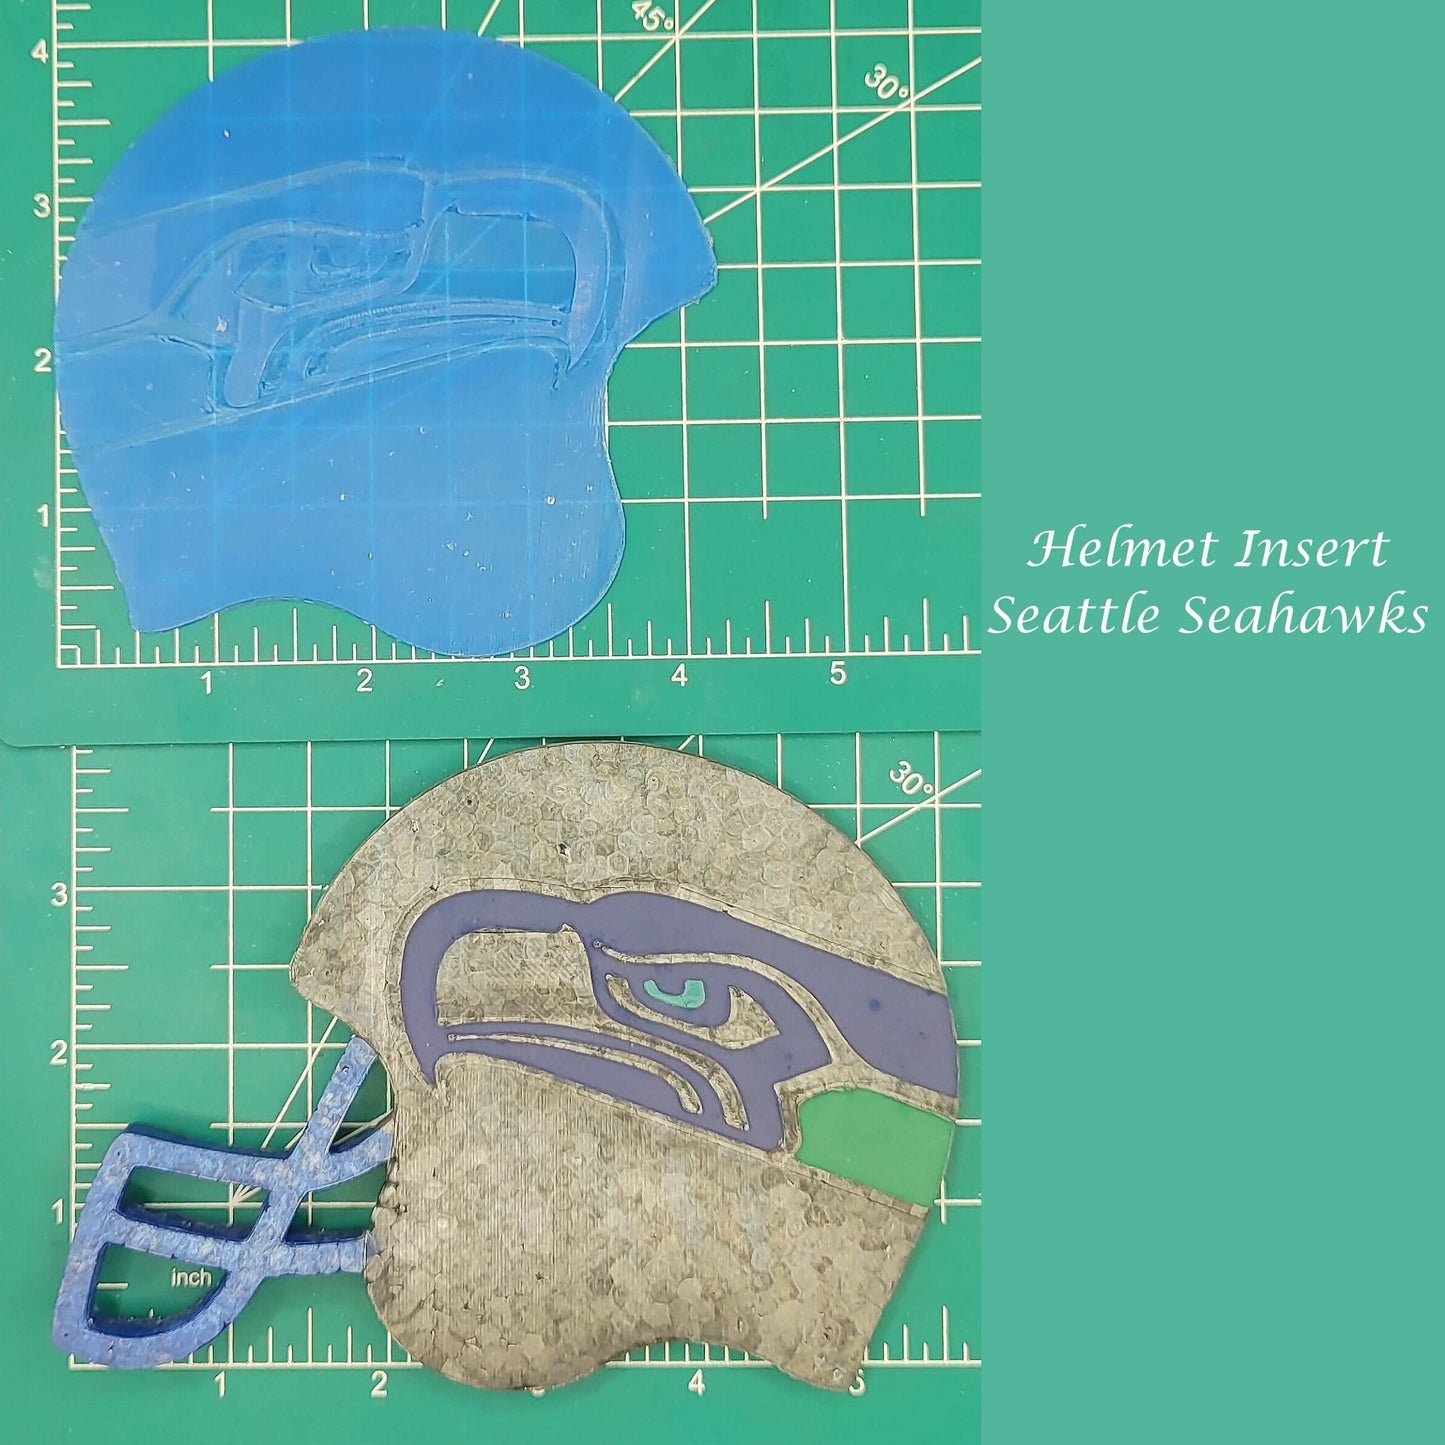 Football Helmet Inserts - Silicone Freshie Mold